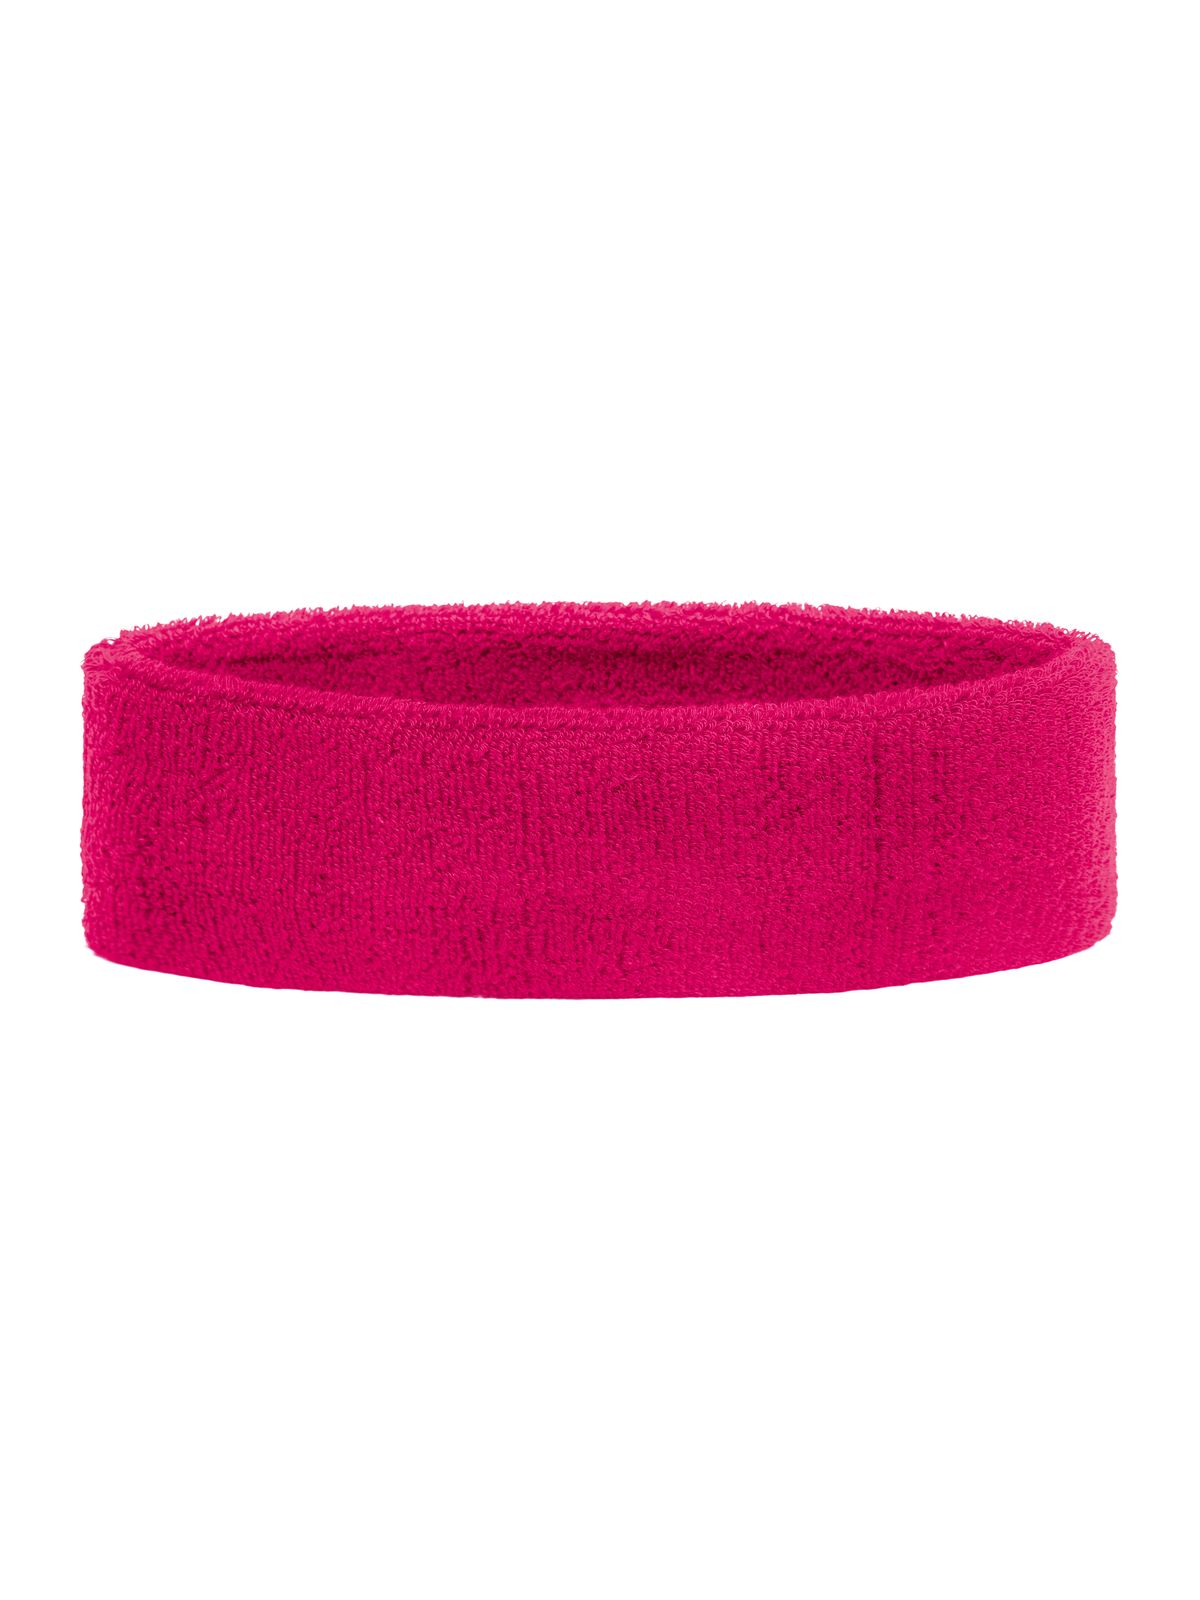 terry-headband-pink.webp